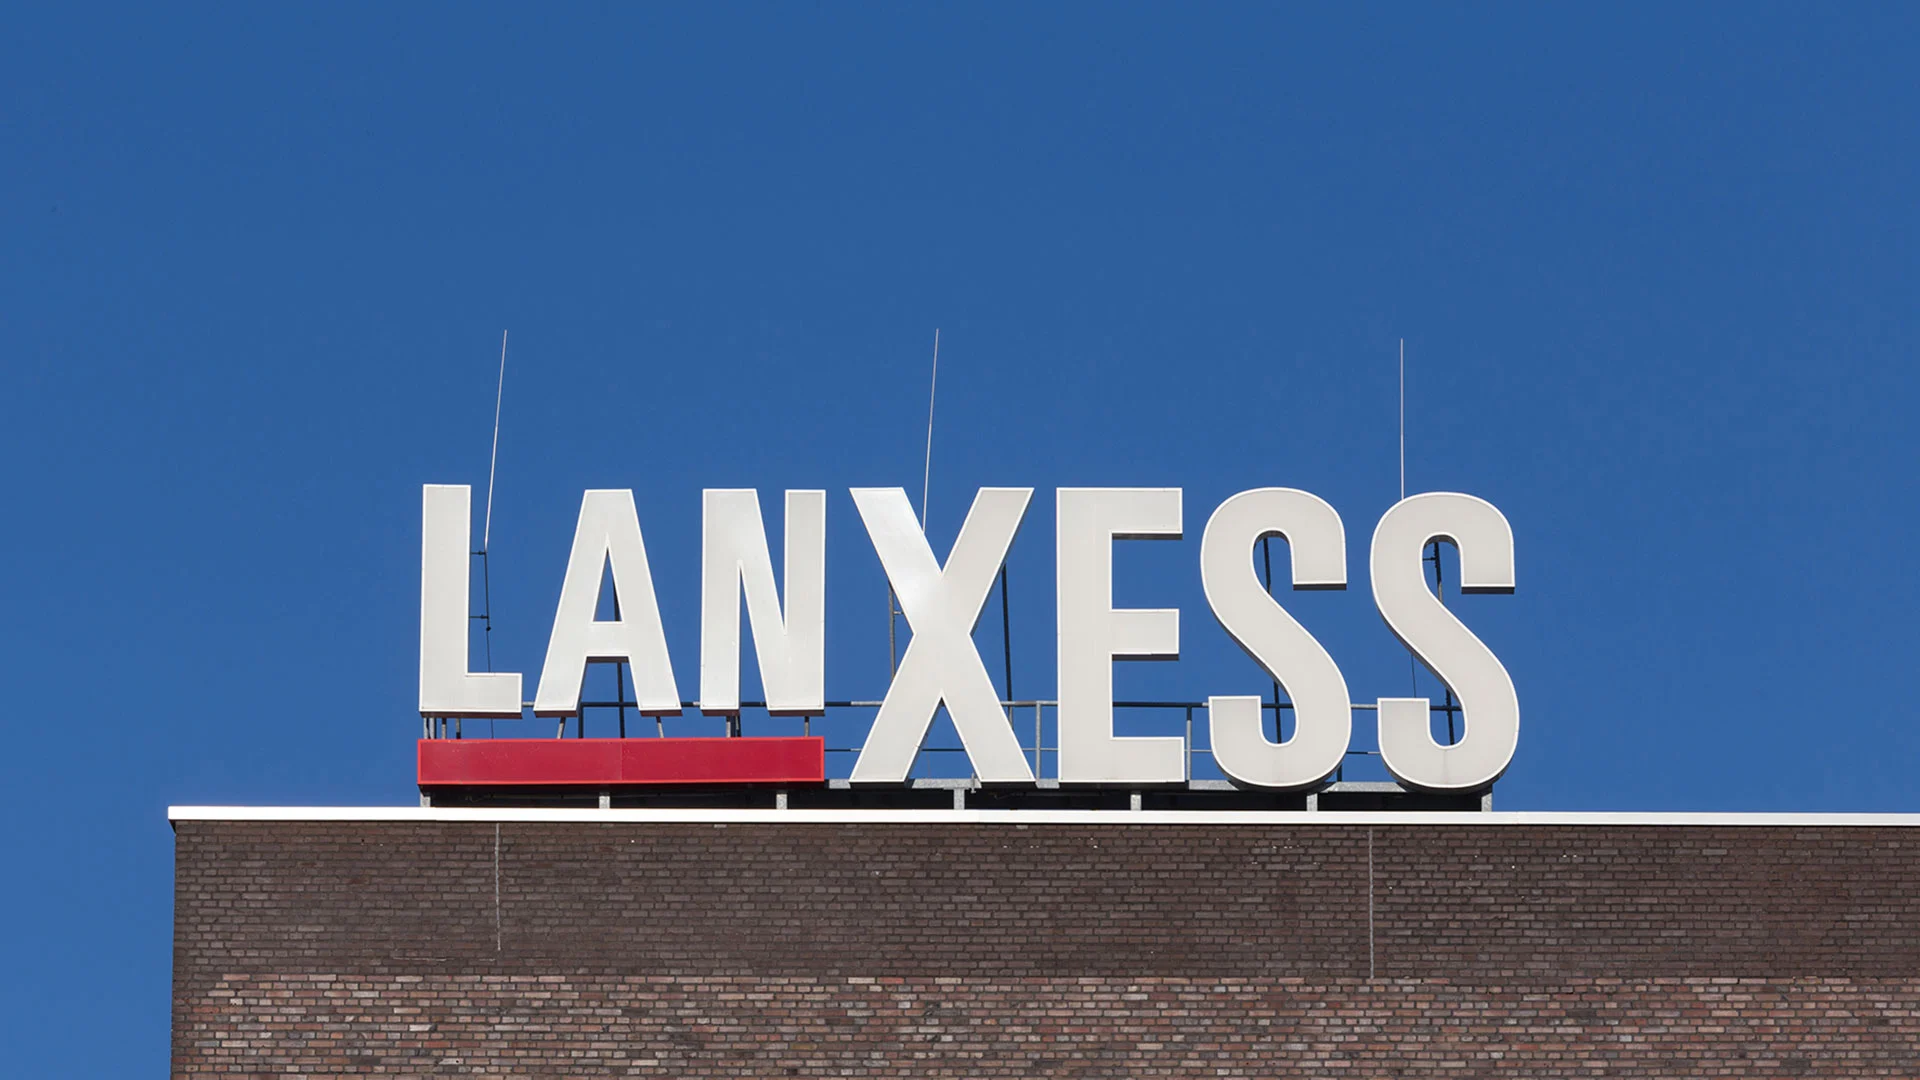 Lanxess-Aktie nach düsterer Prognose massiv unter Druck – auch BASF leidet (Foto: Shutterstock)